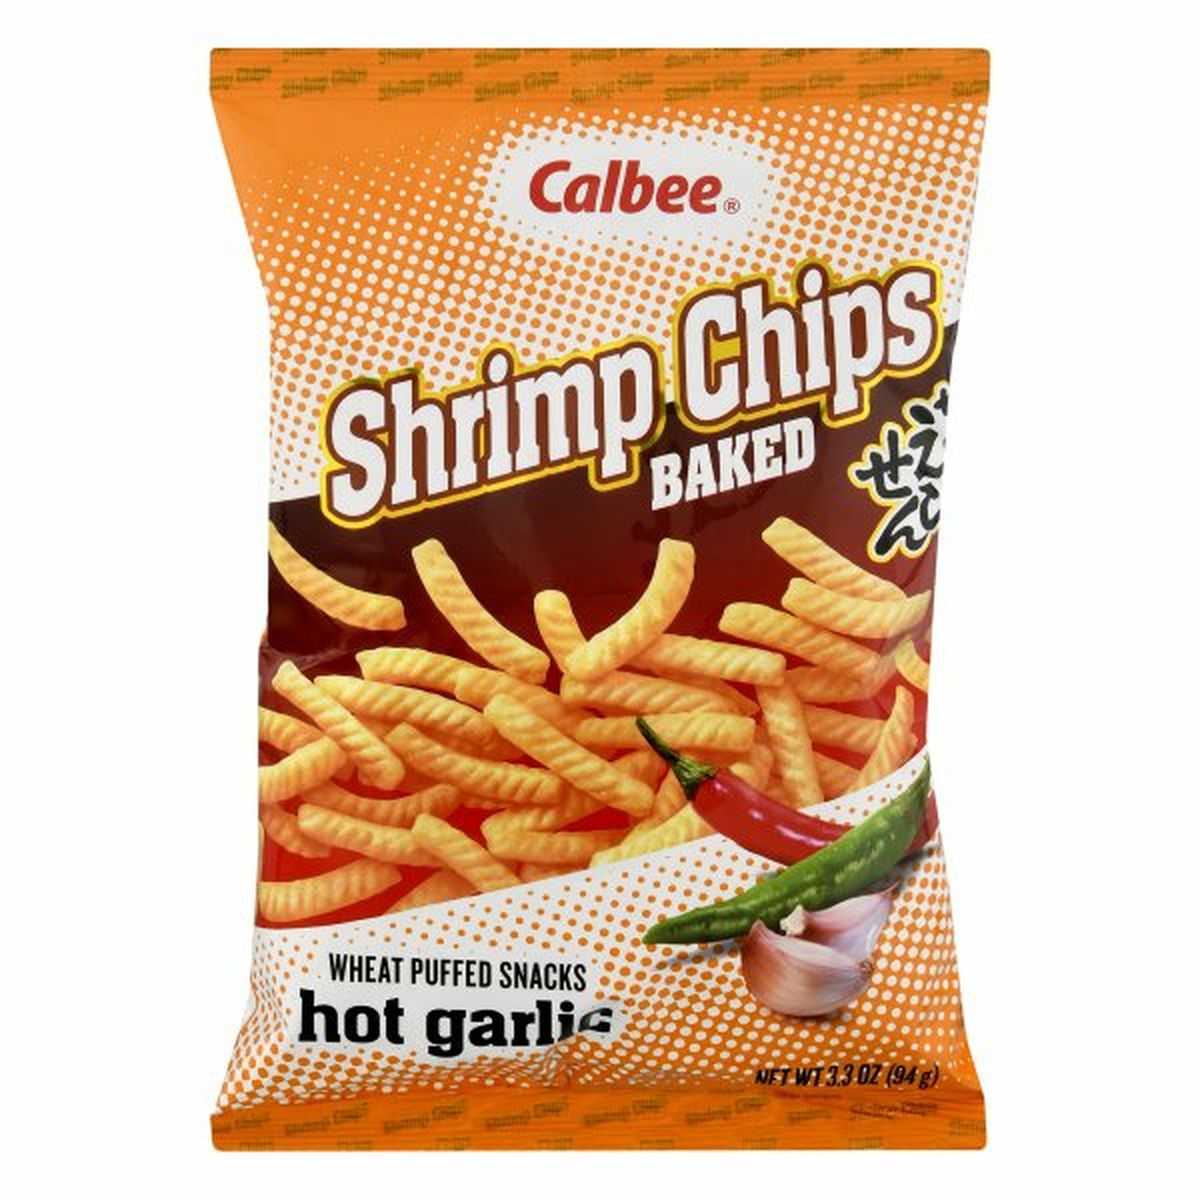 Calories in Calbee Shrimp Chips, Hot Garlic, Baked